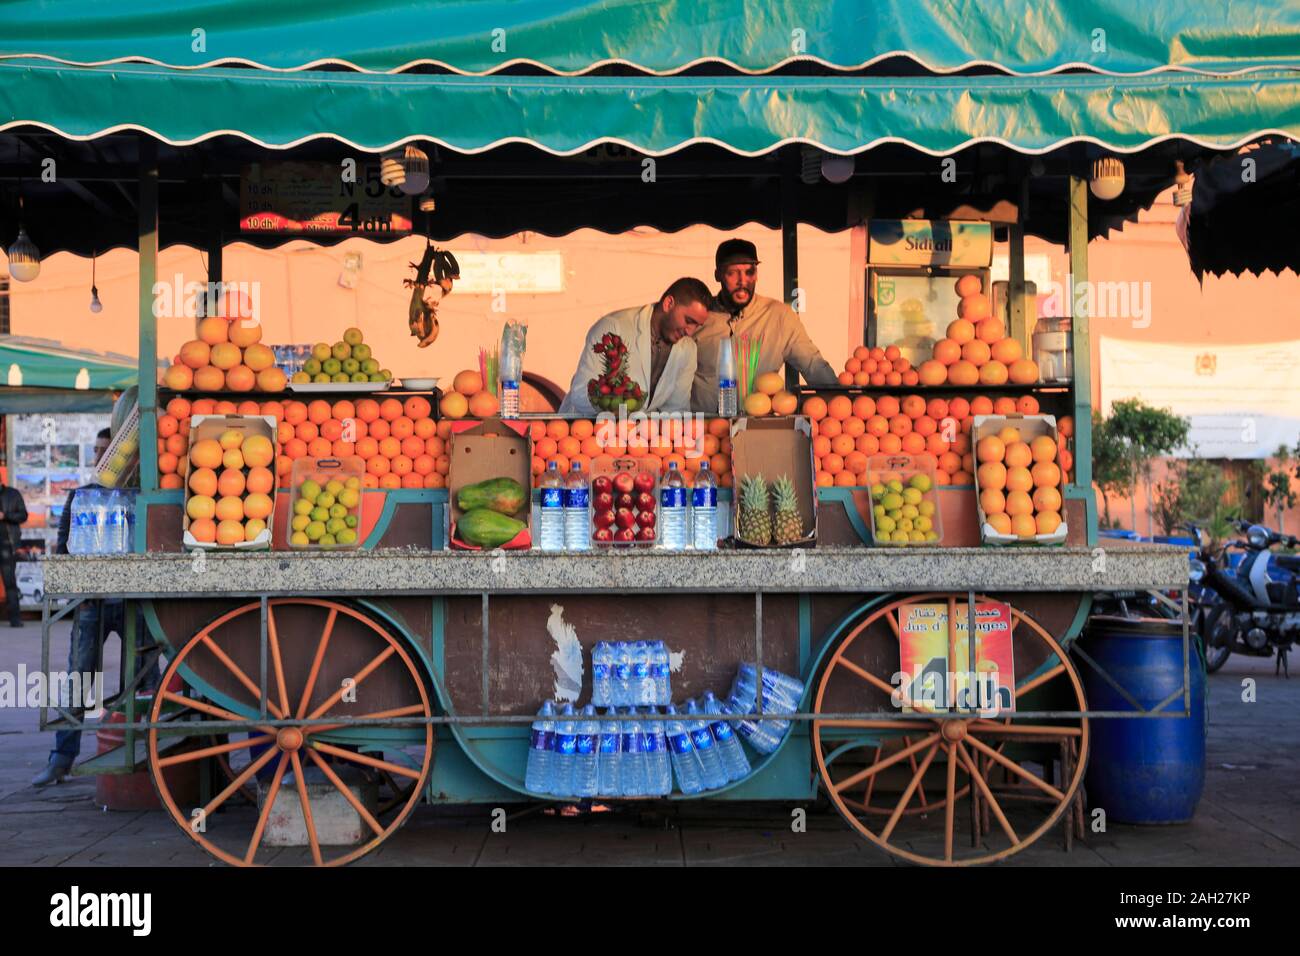 Les vendeurs de jus, la place Jemaa el Fna (place Djema Djemaa Fnaa), UNESCO World Heritage Site, Marrakech, Marrakech, Maroc, Afrique du Nord Banque D'Images